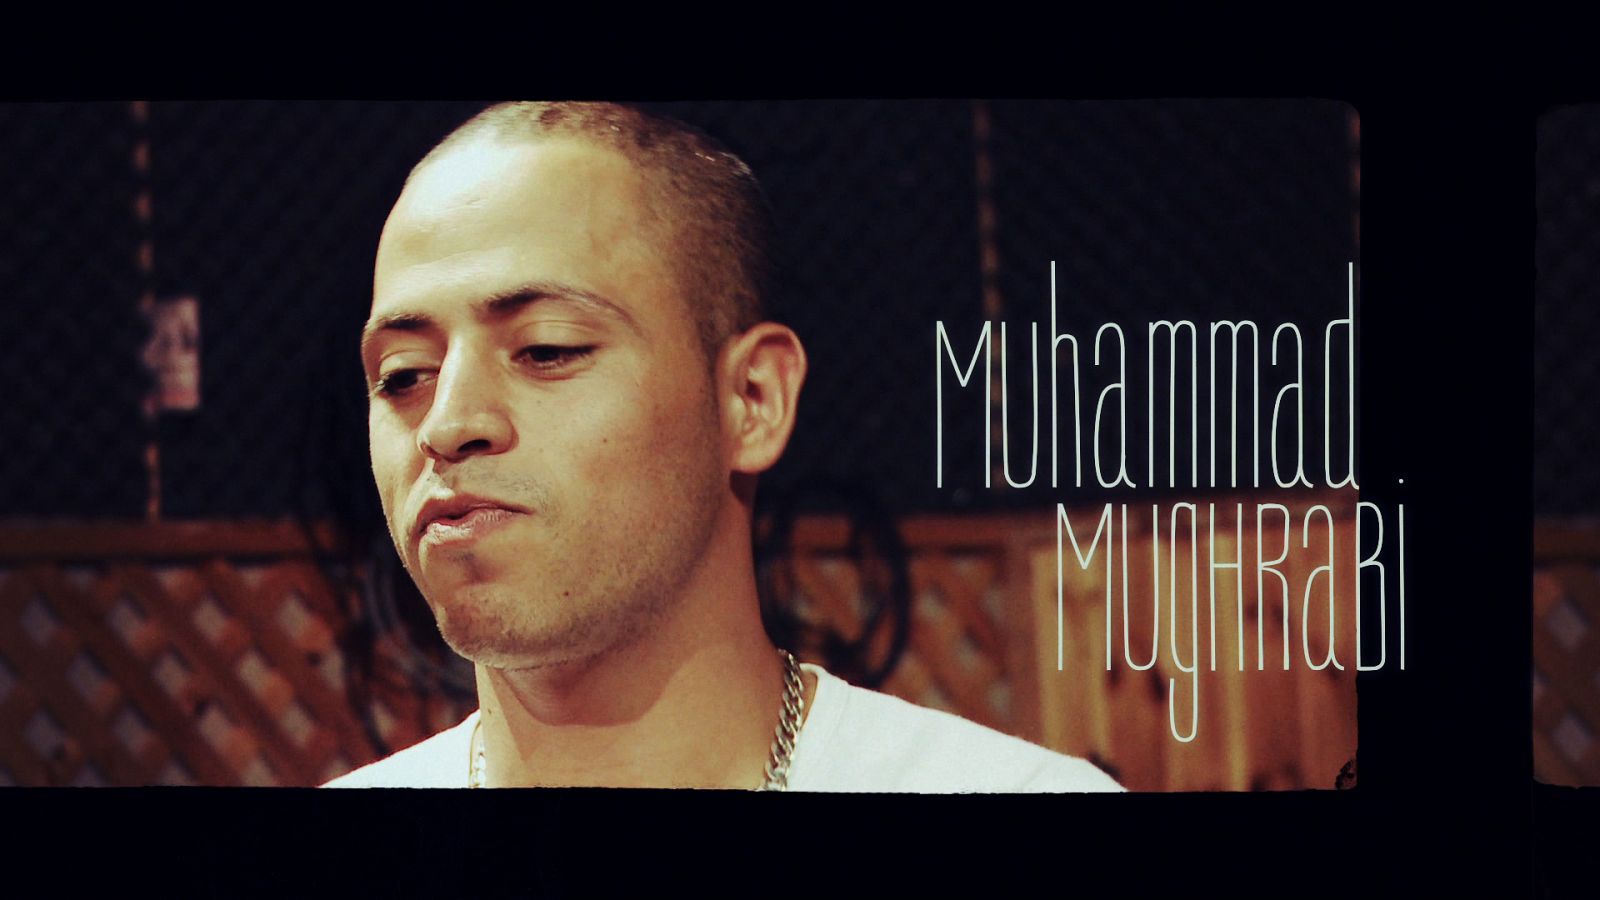 Muhammad Mughrabi